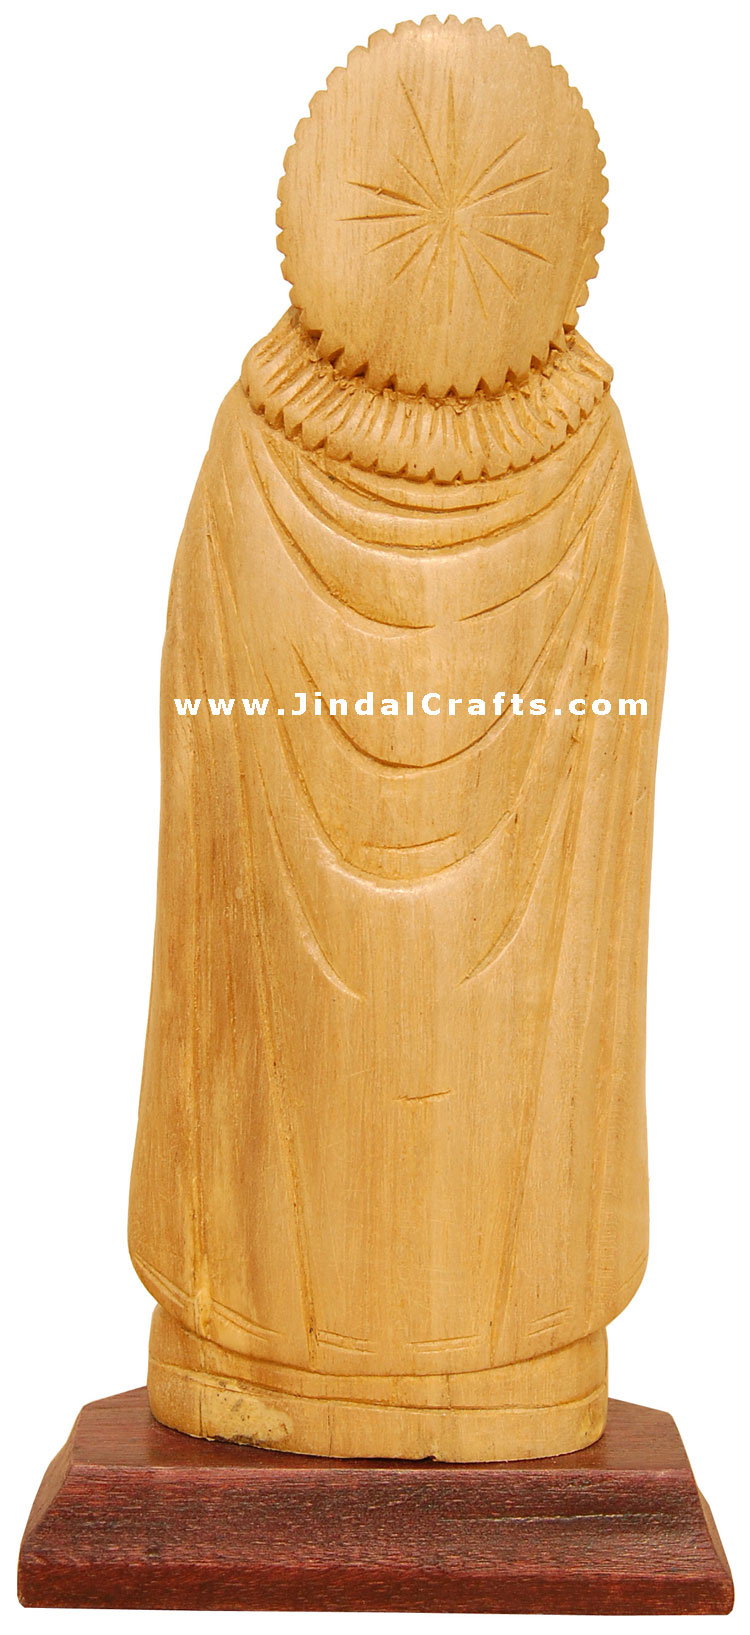 Handcrafted Wooden God Jesus Christian Sculpture Art